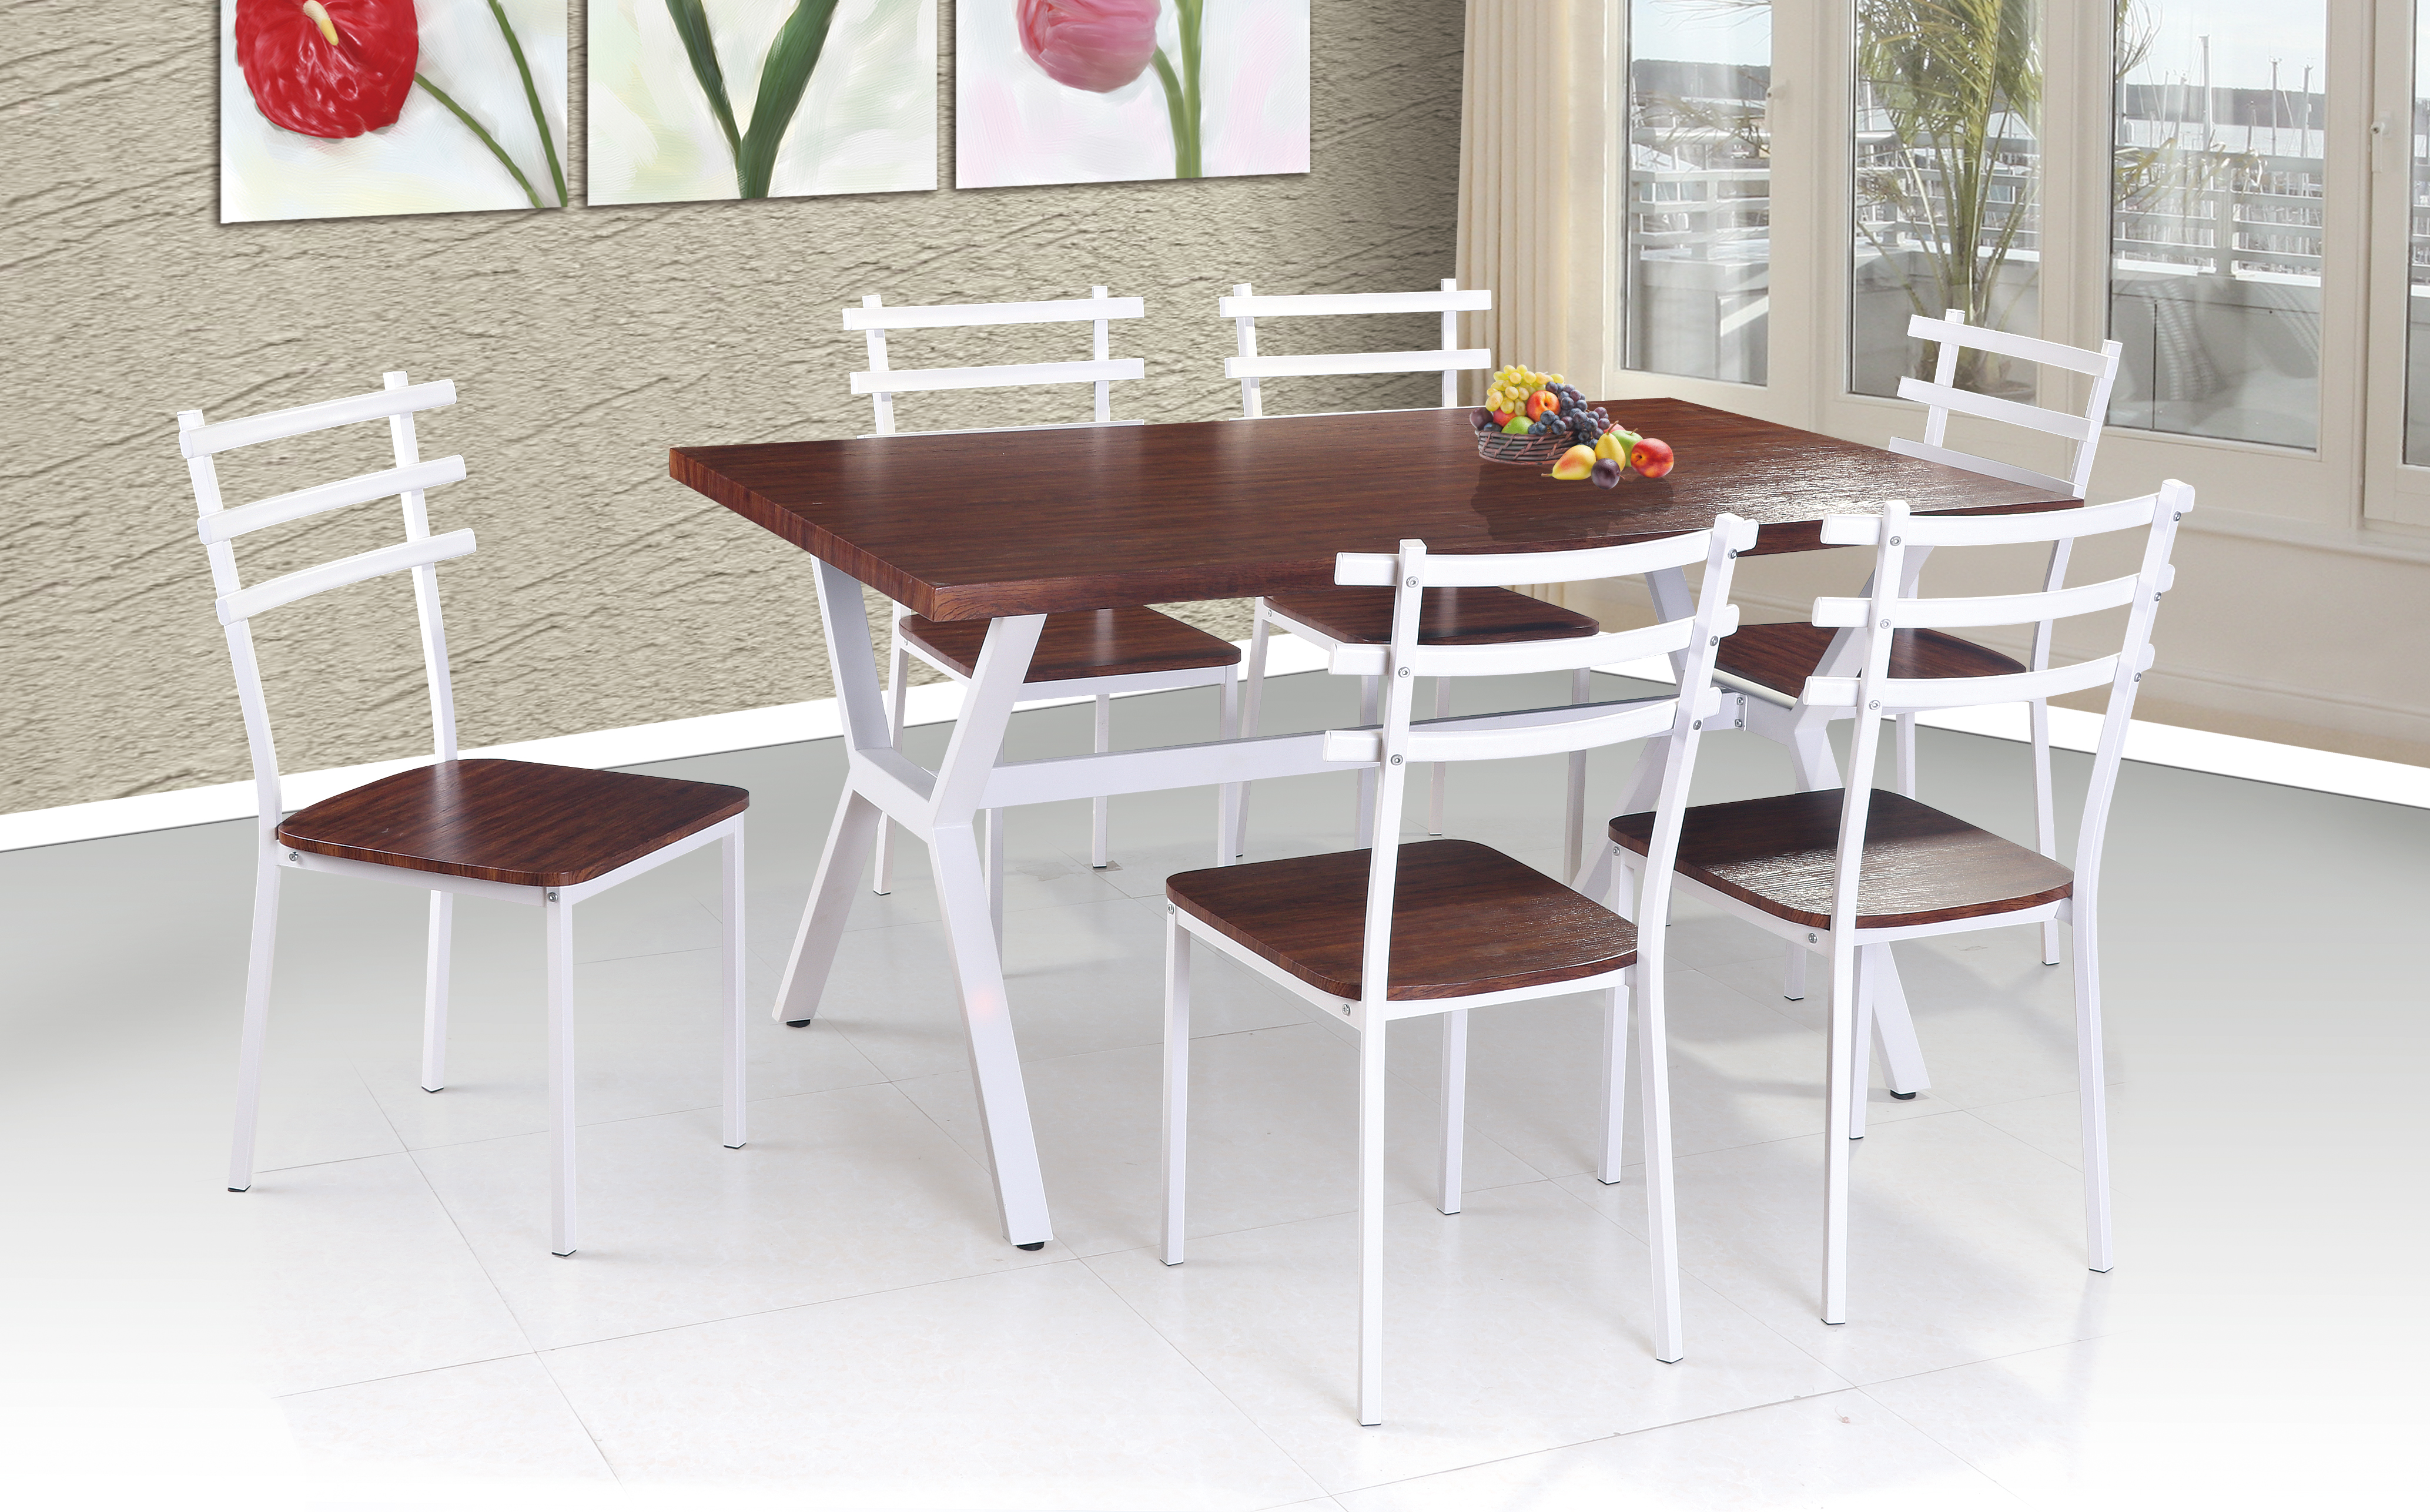 Special Design for Indoor Bistro Tables - GS-5136 7pc dining set – Xinhai